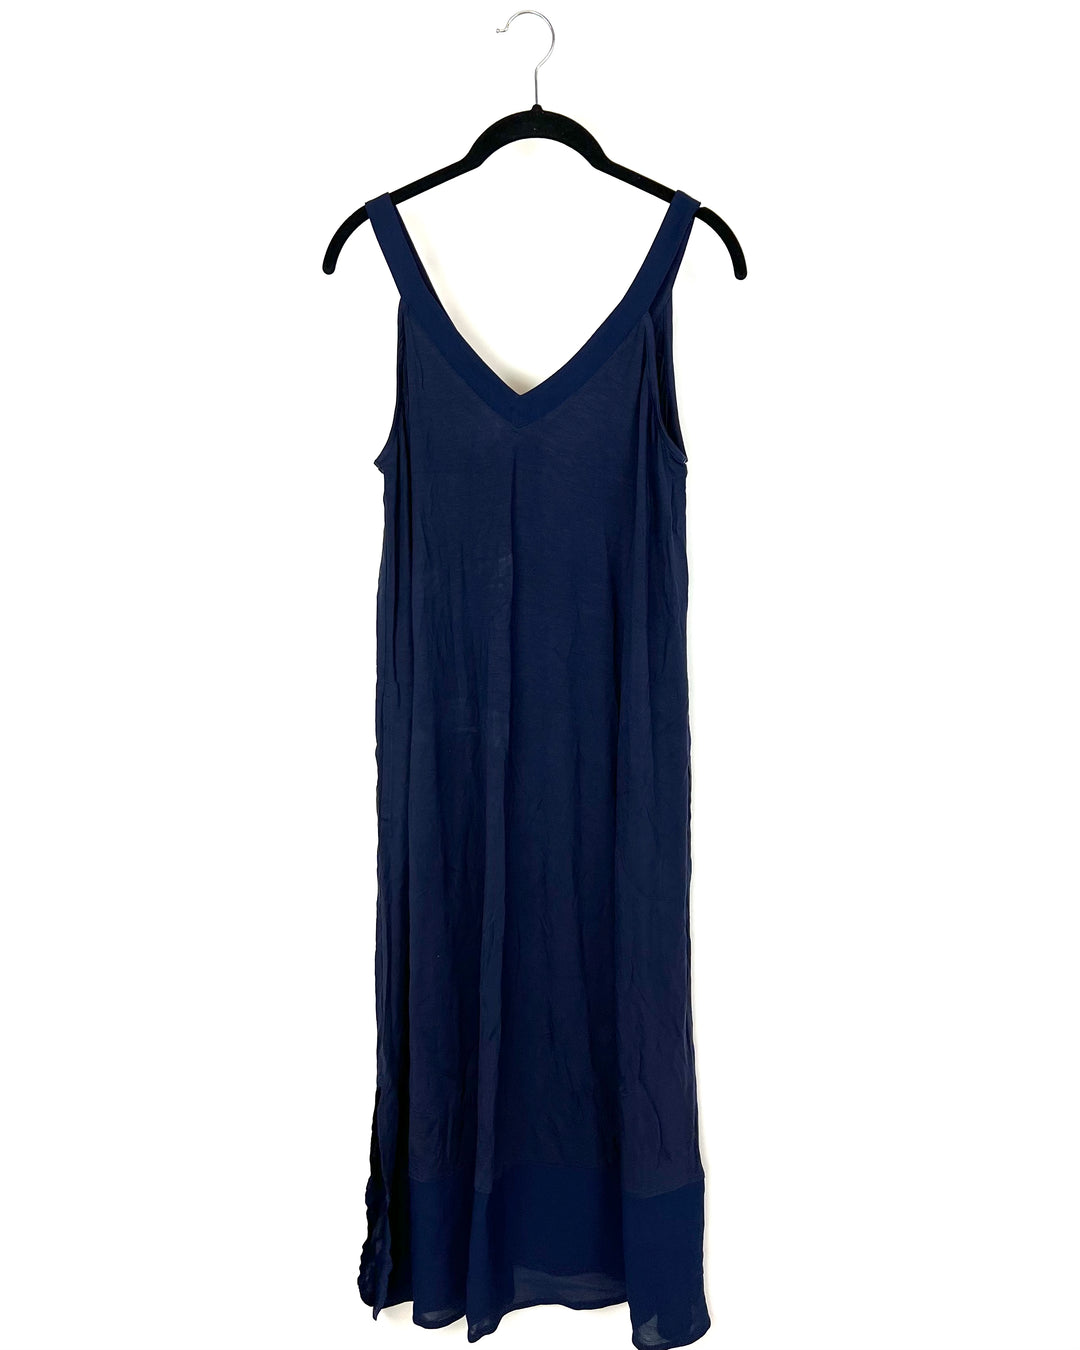 Navy Blue Sleeveless Lounge / Sleepwear Dress - Small